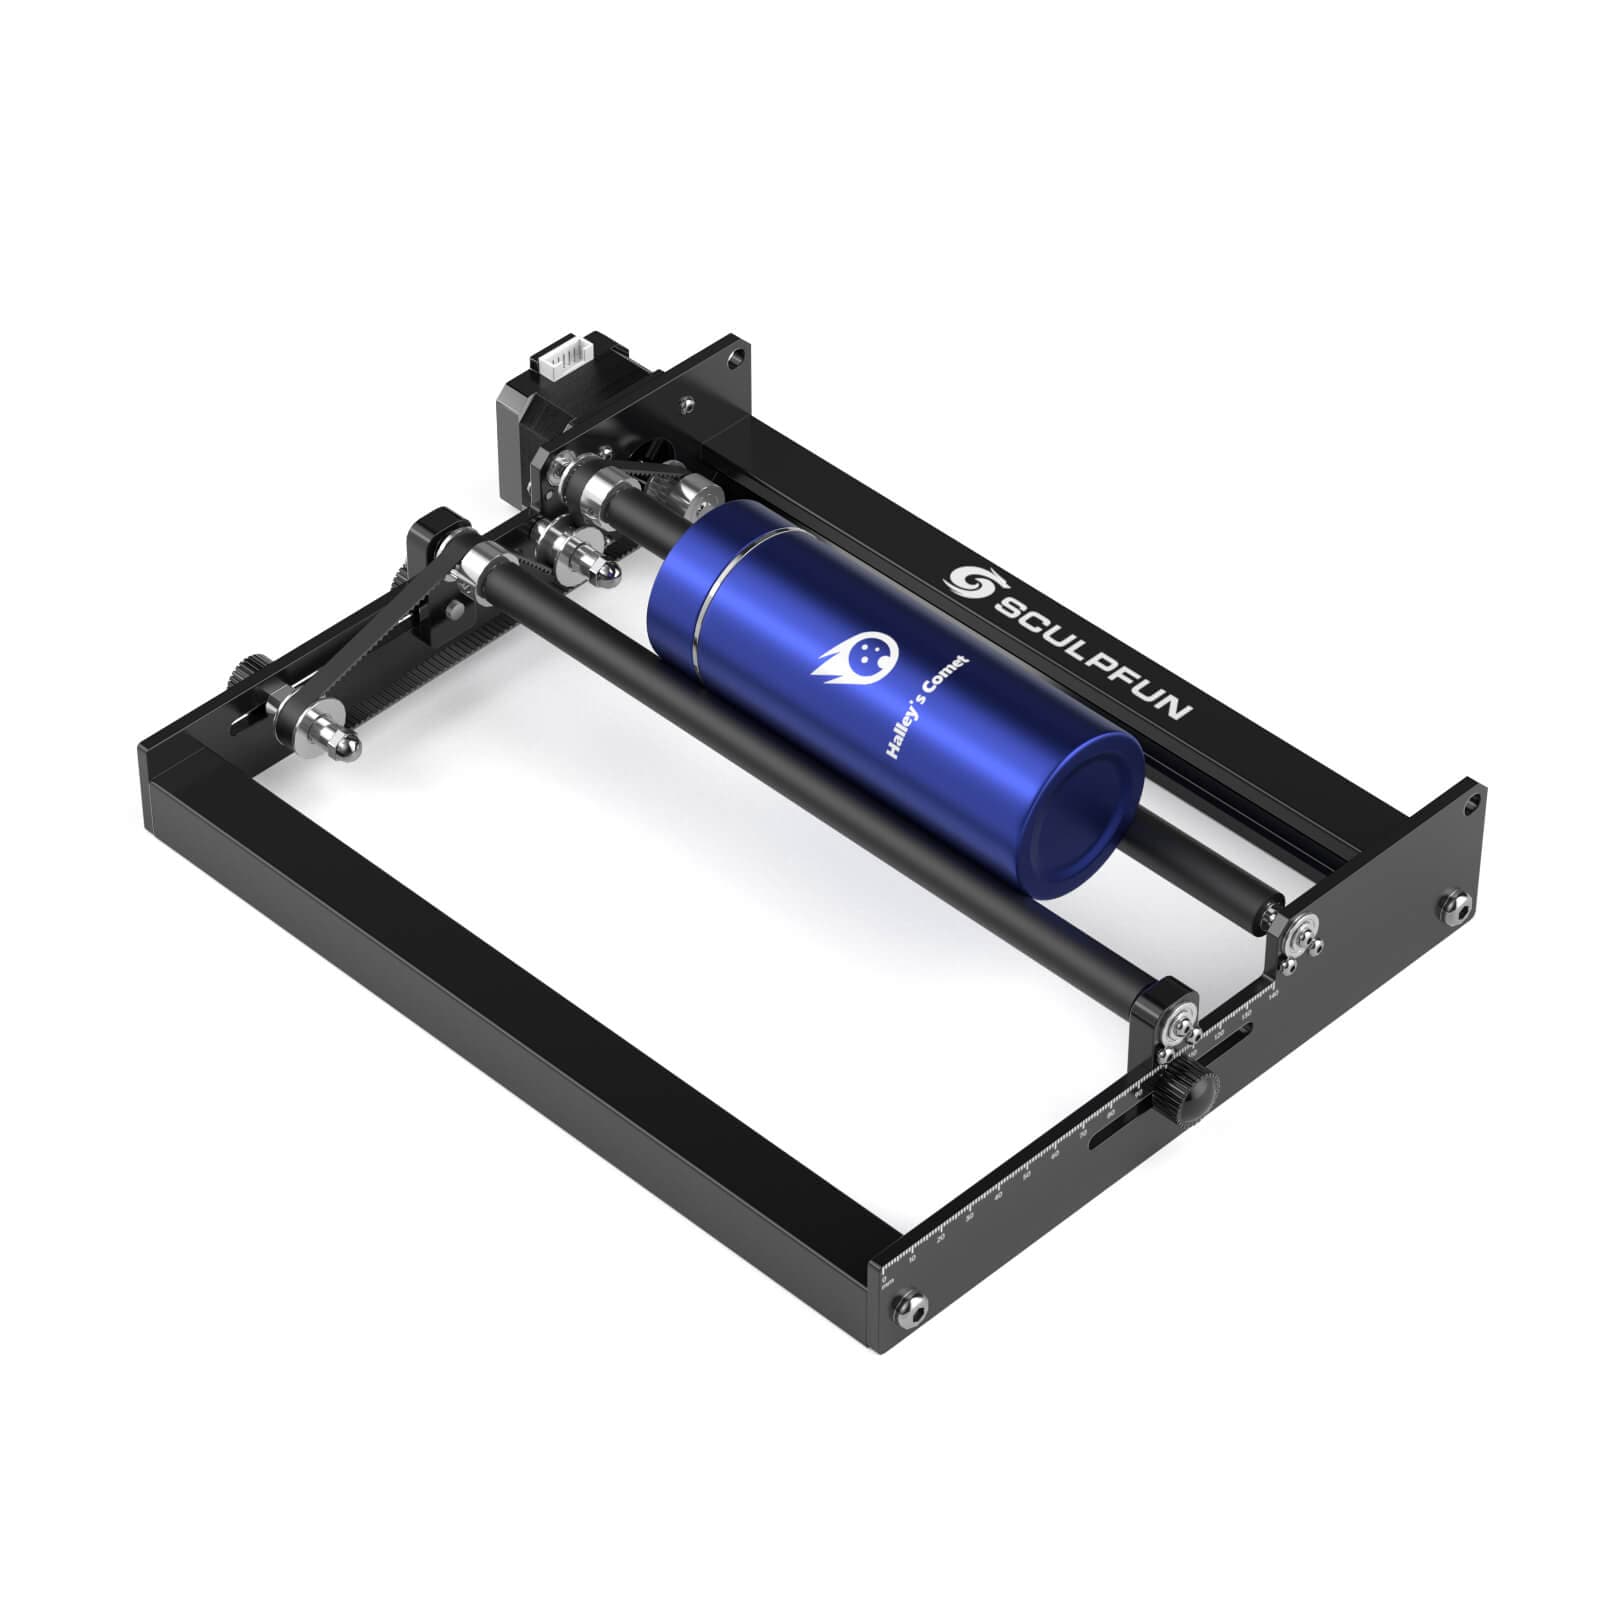 Sculpfun iCube Portable Laser Engraving Machine